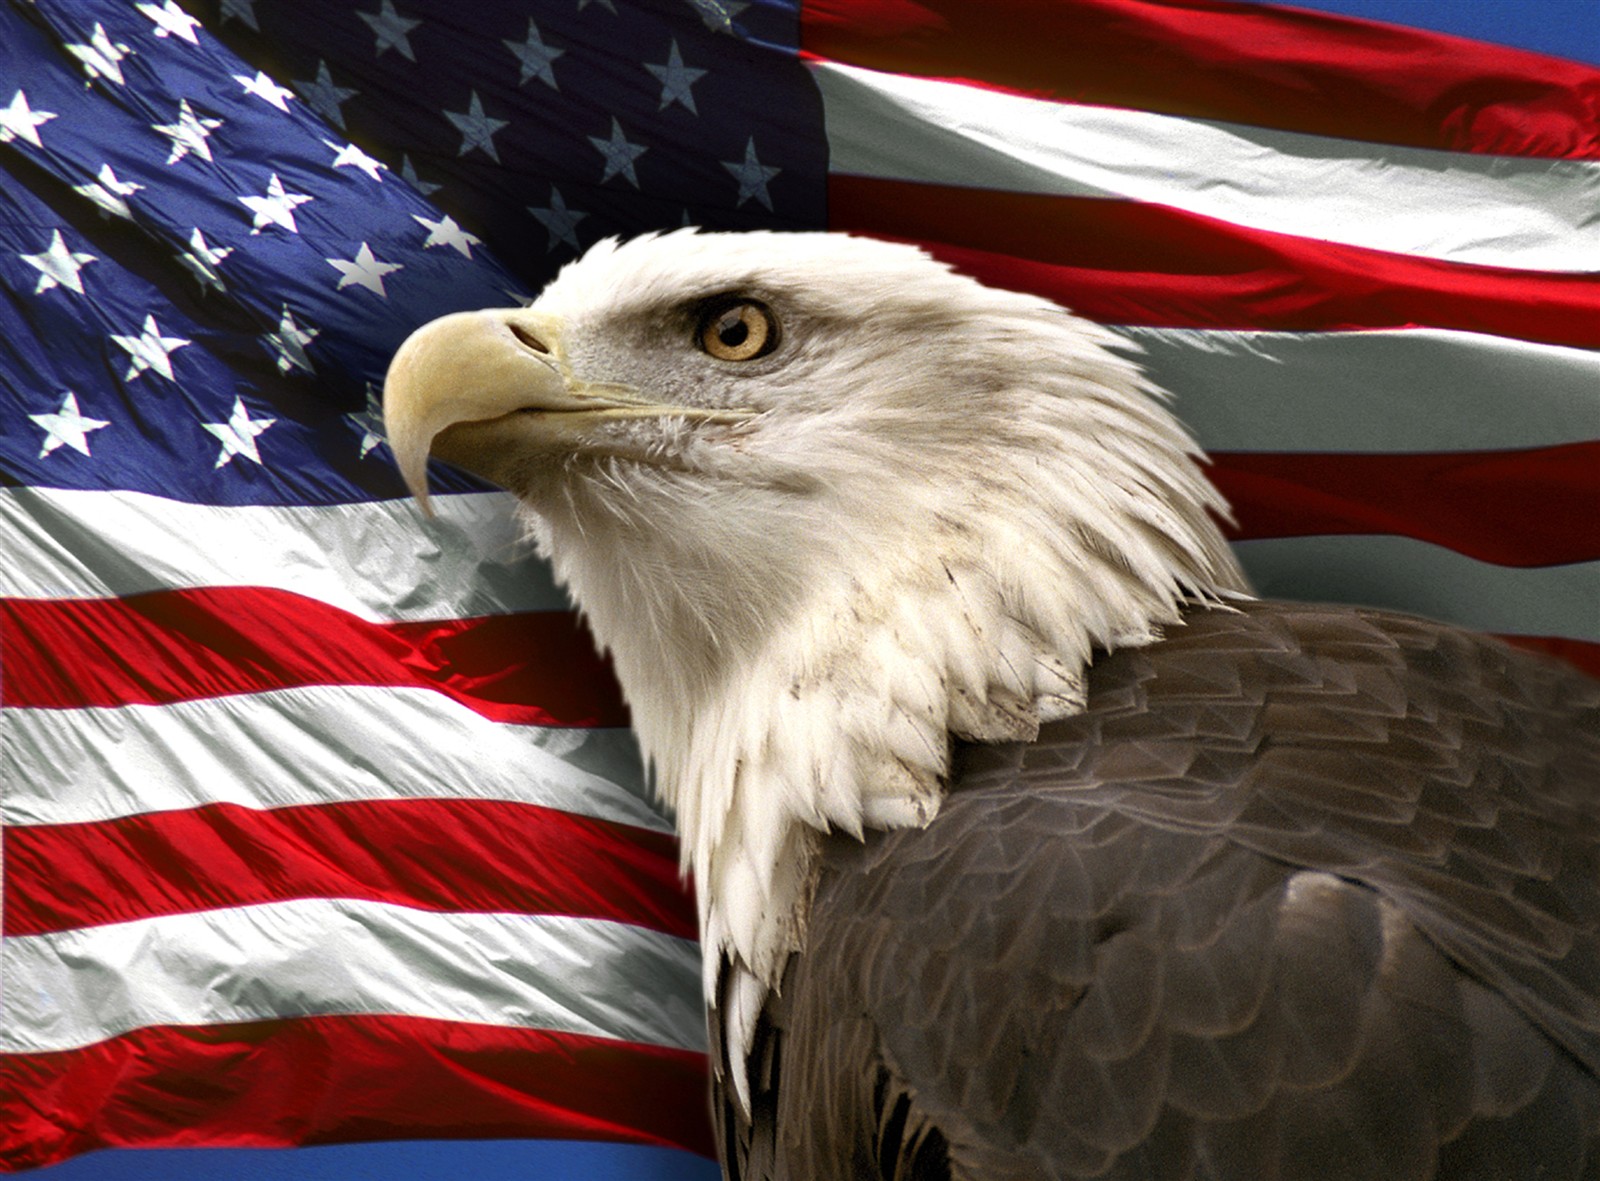 49+] American Flag with Eagle Wallpaper on WallpaperSafari